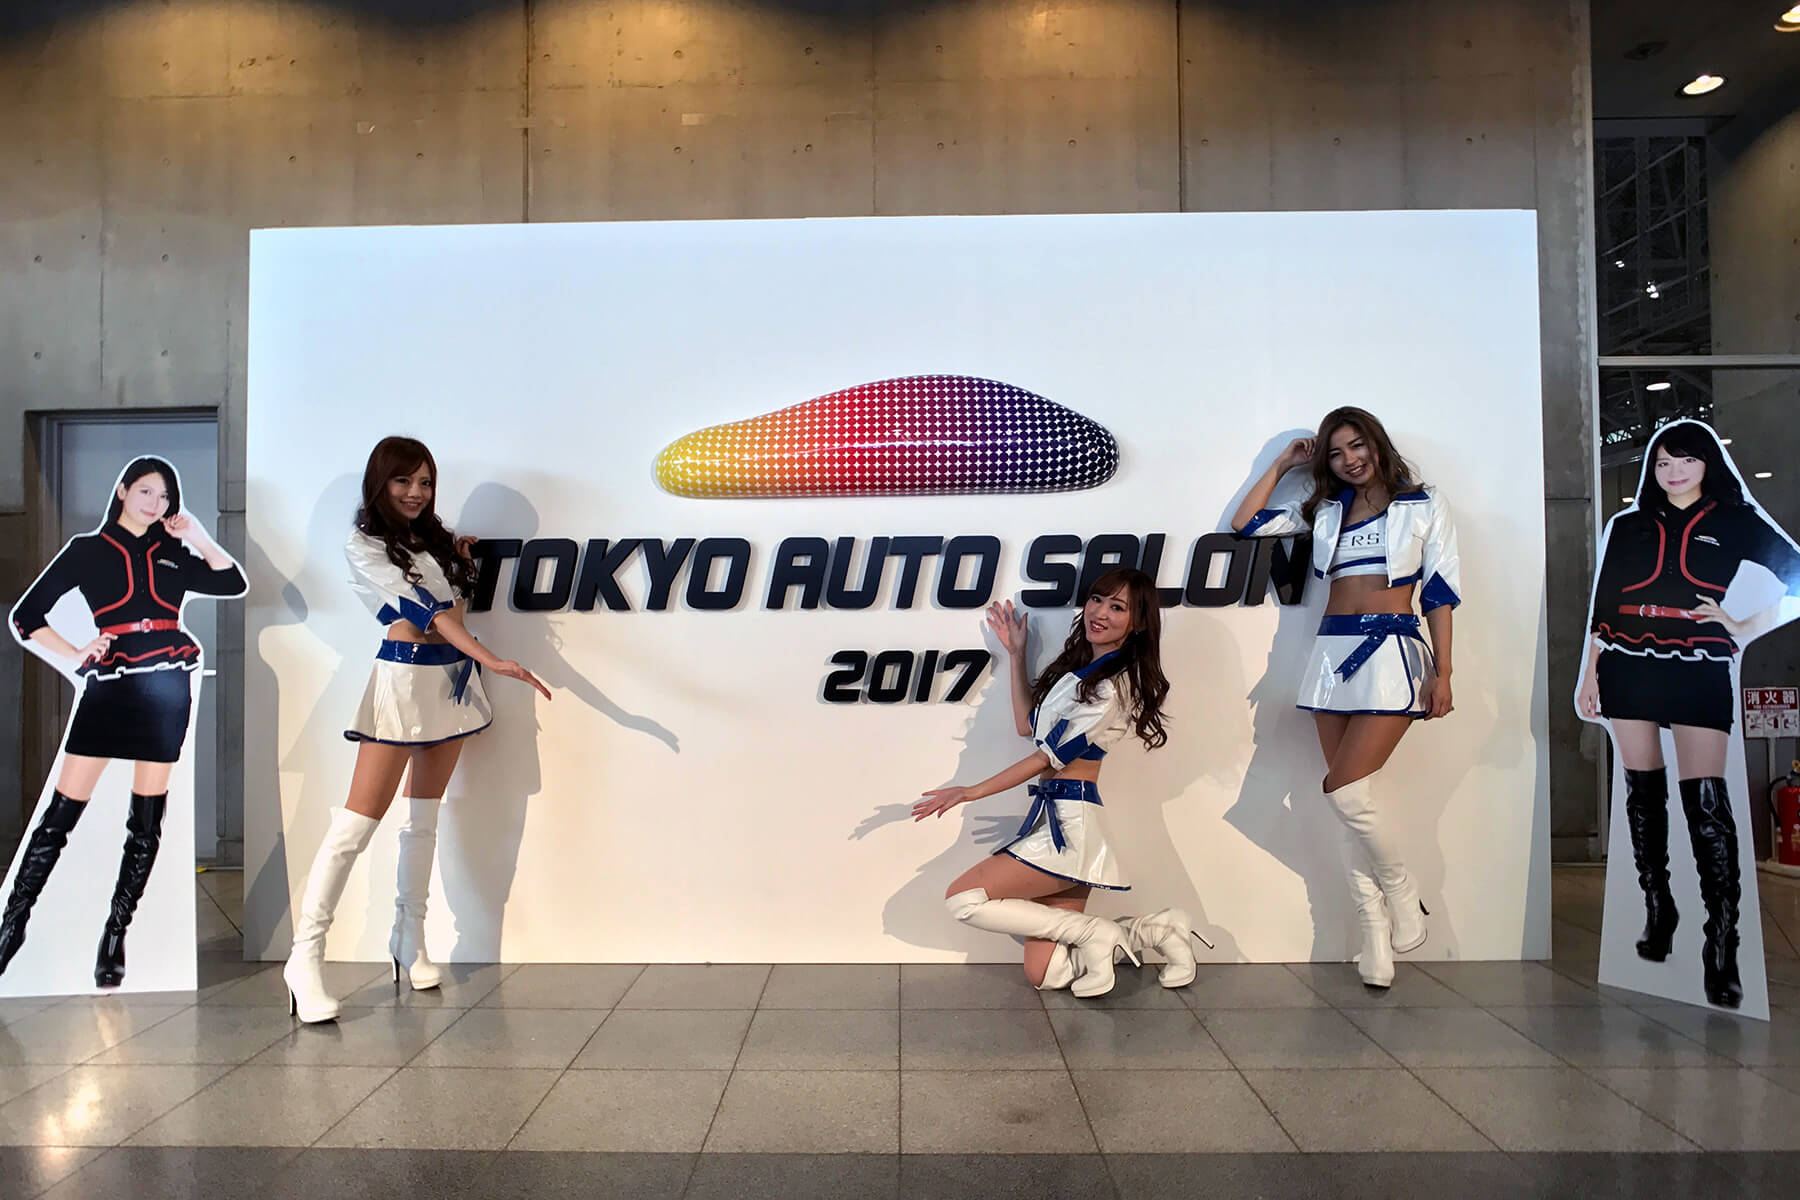 TOKYO AUTO SALON 2017